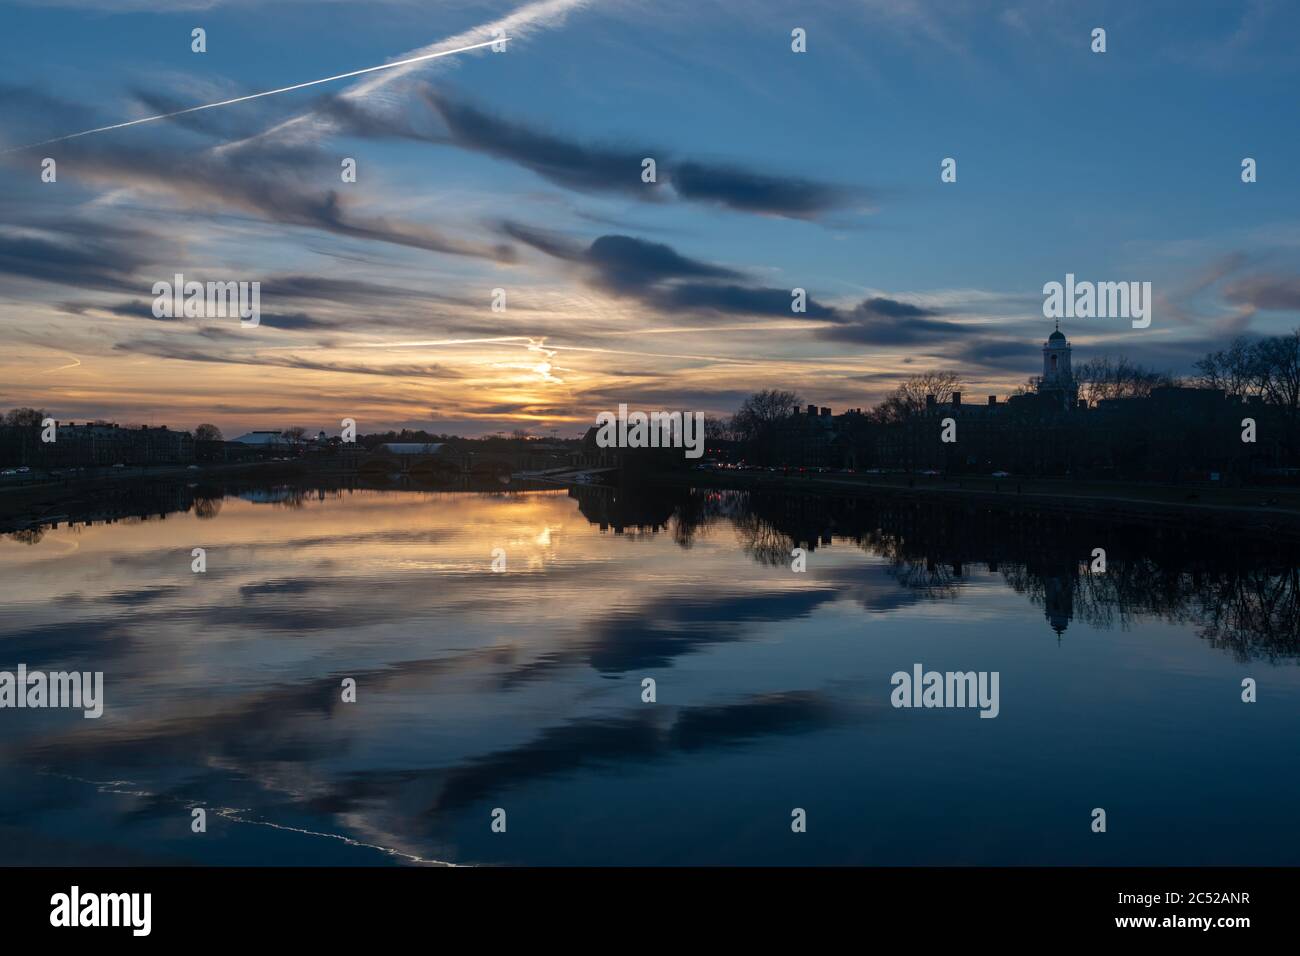 Charles River at dusk. Sleepy sunset in scenic Cambridge, New England, USA. Stock Photo